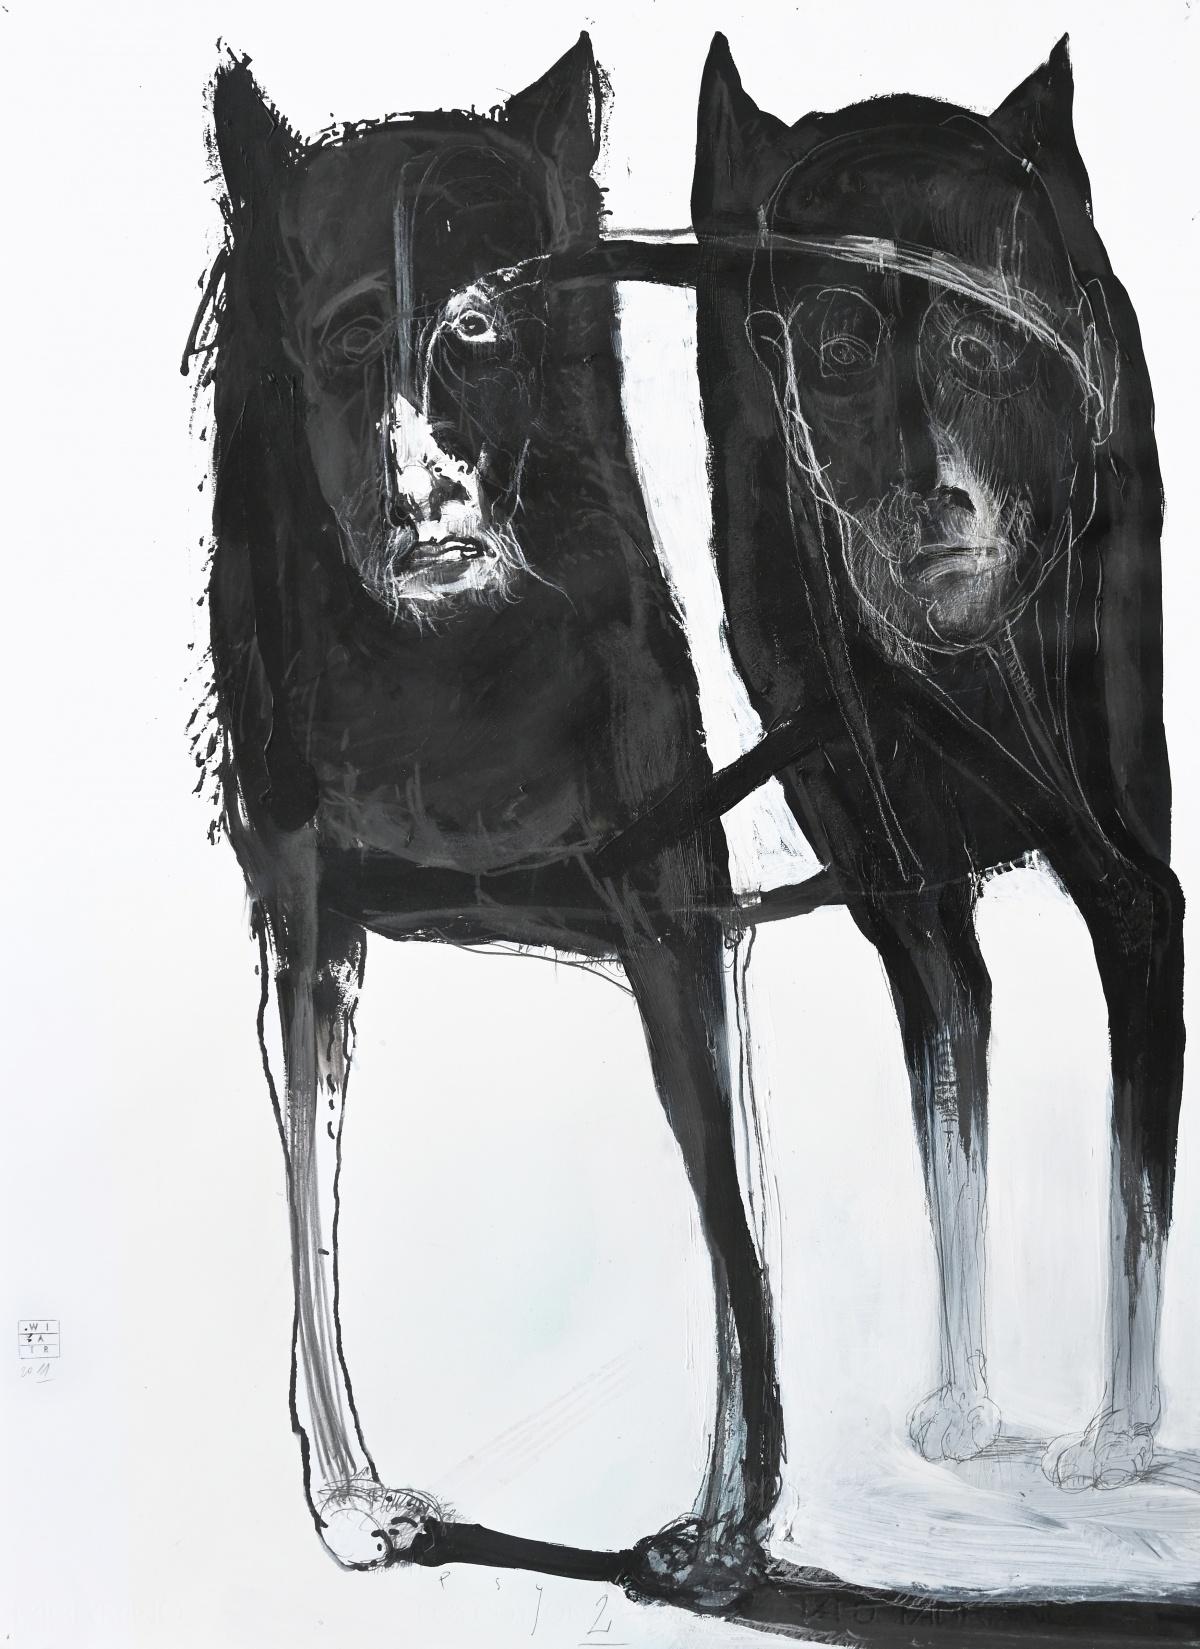 Zdzislaw Wiatr Figurative Art - Dogs 2 - Contemporary Drawing, Figurative, Black & white, Polish artist